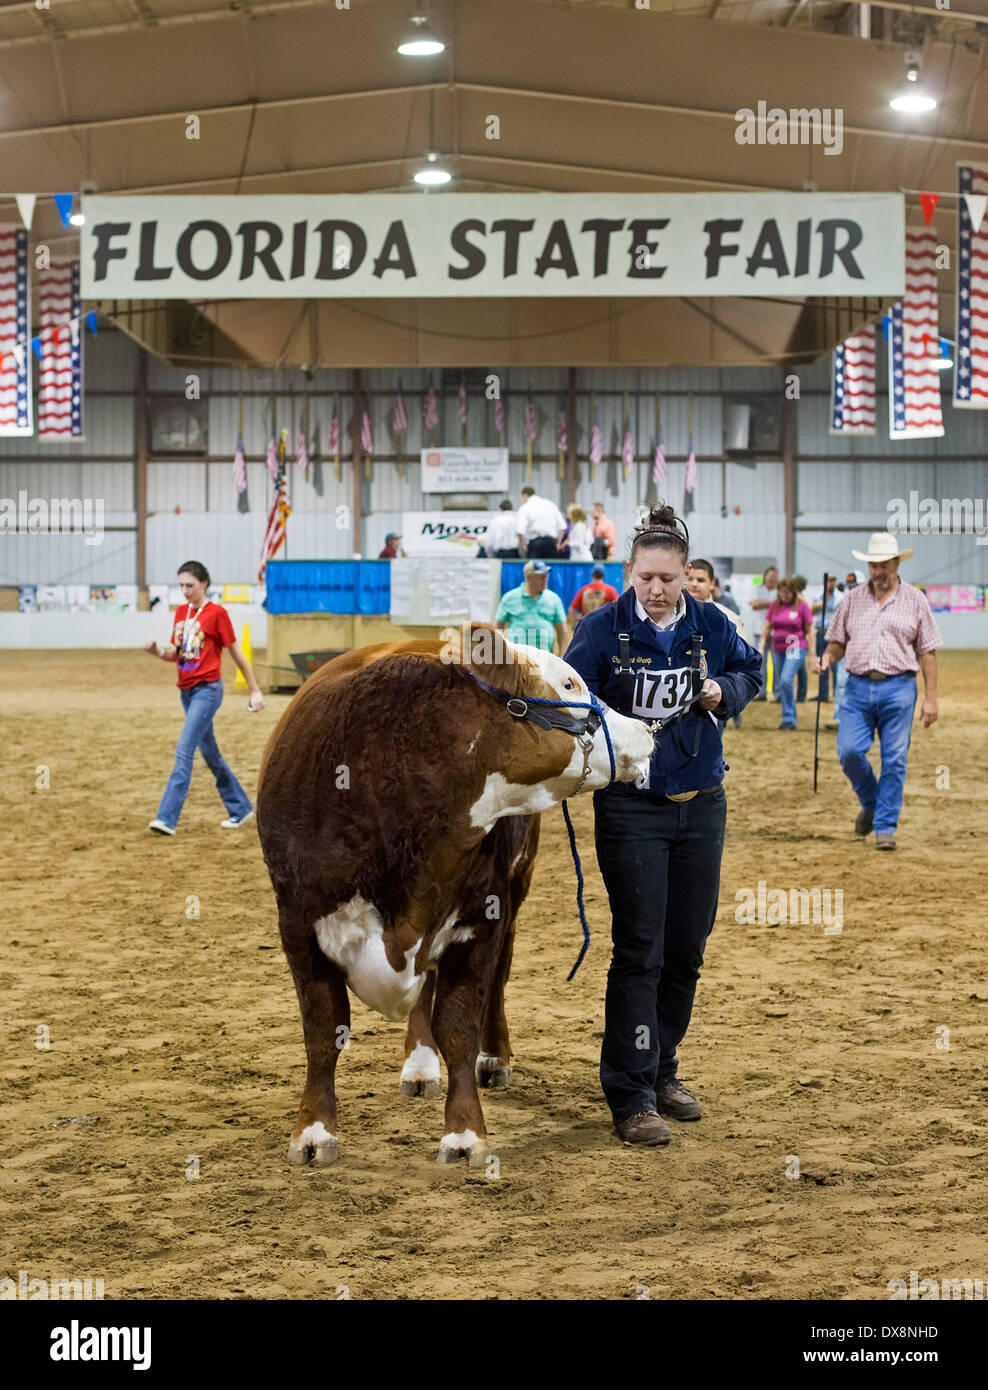 Tampa, Florida - Youth livestock judging at the Florida State Fair. Stock Photo